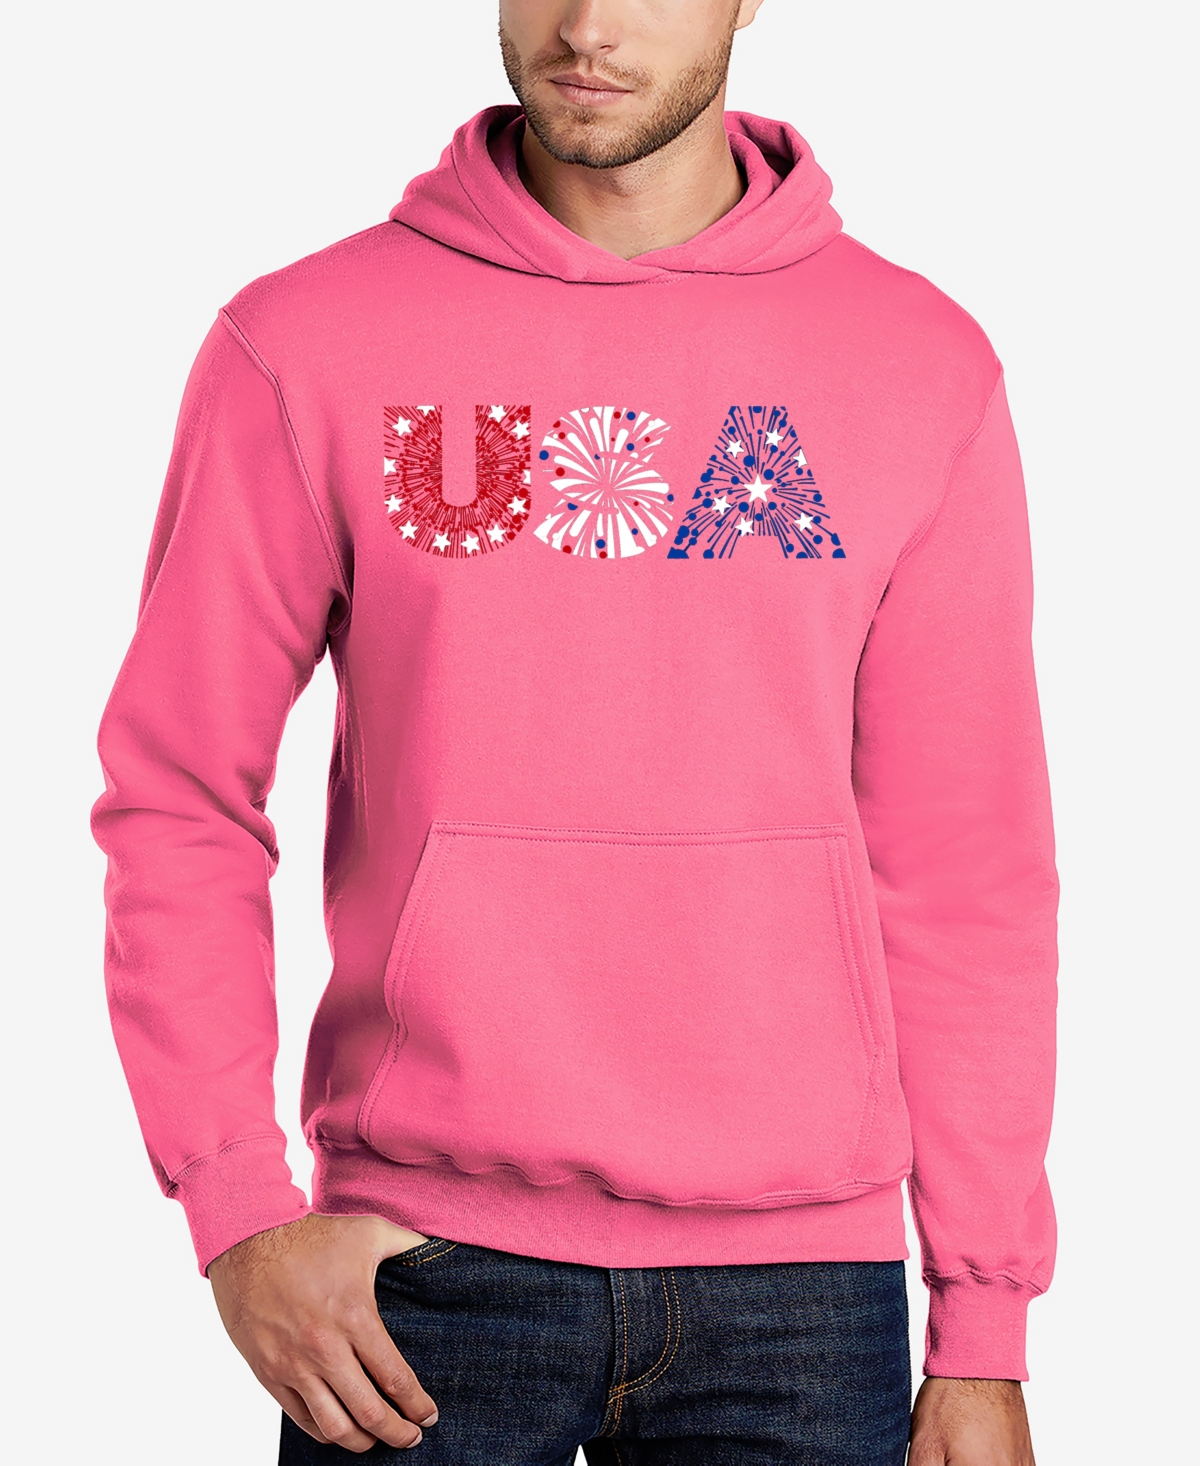 Usa Fireworks - Men's Word Art Hooded Sweatshirt - Pink